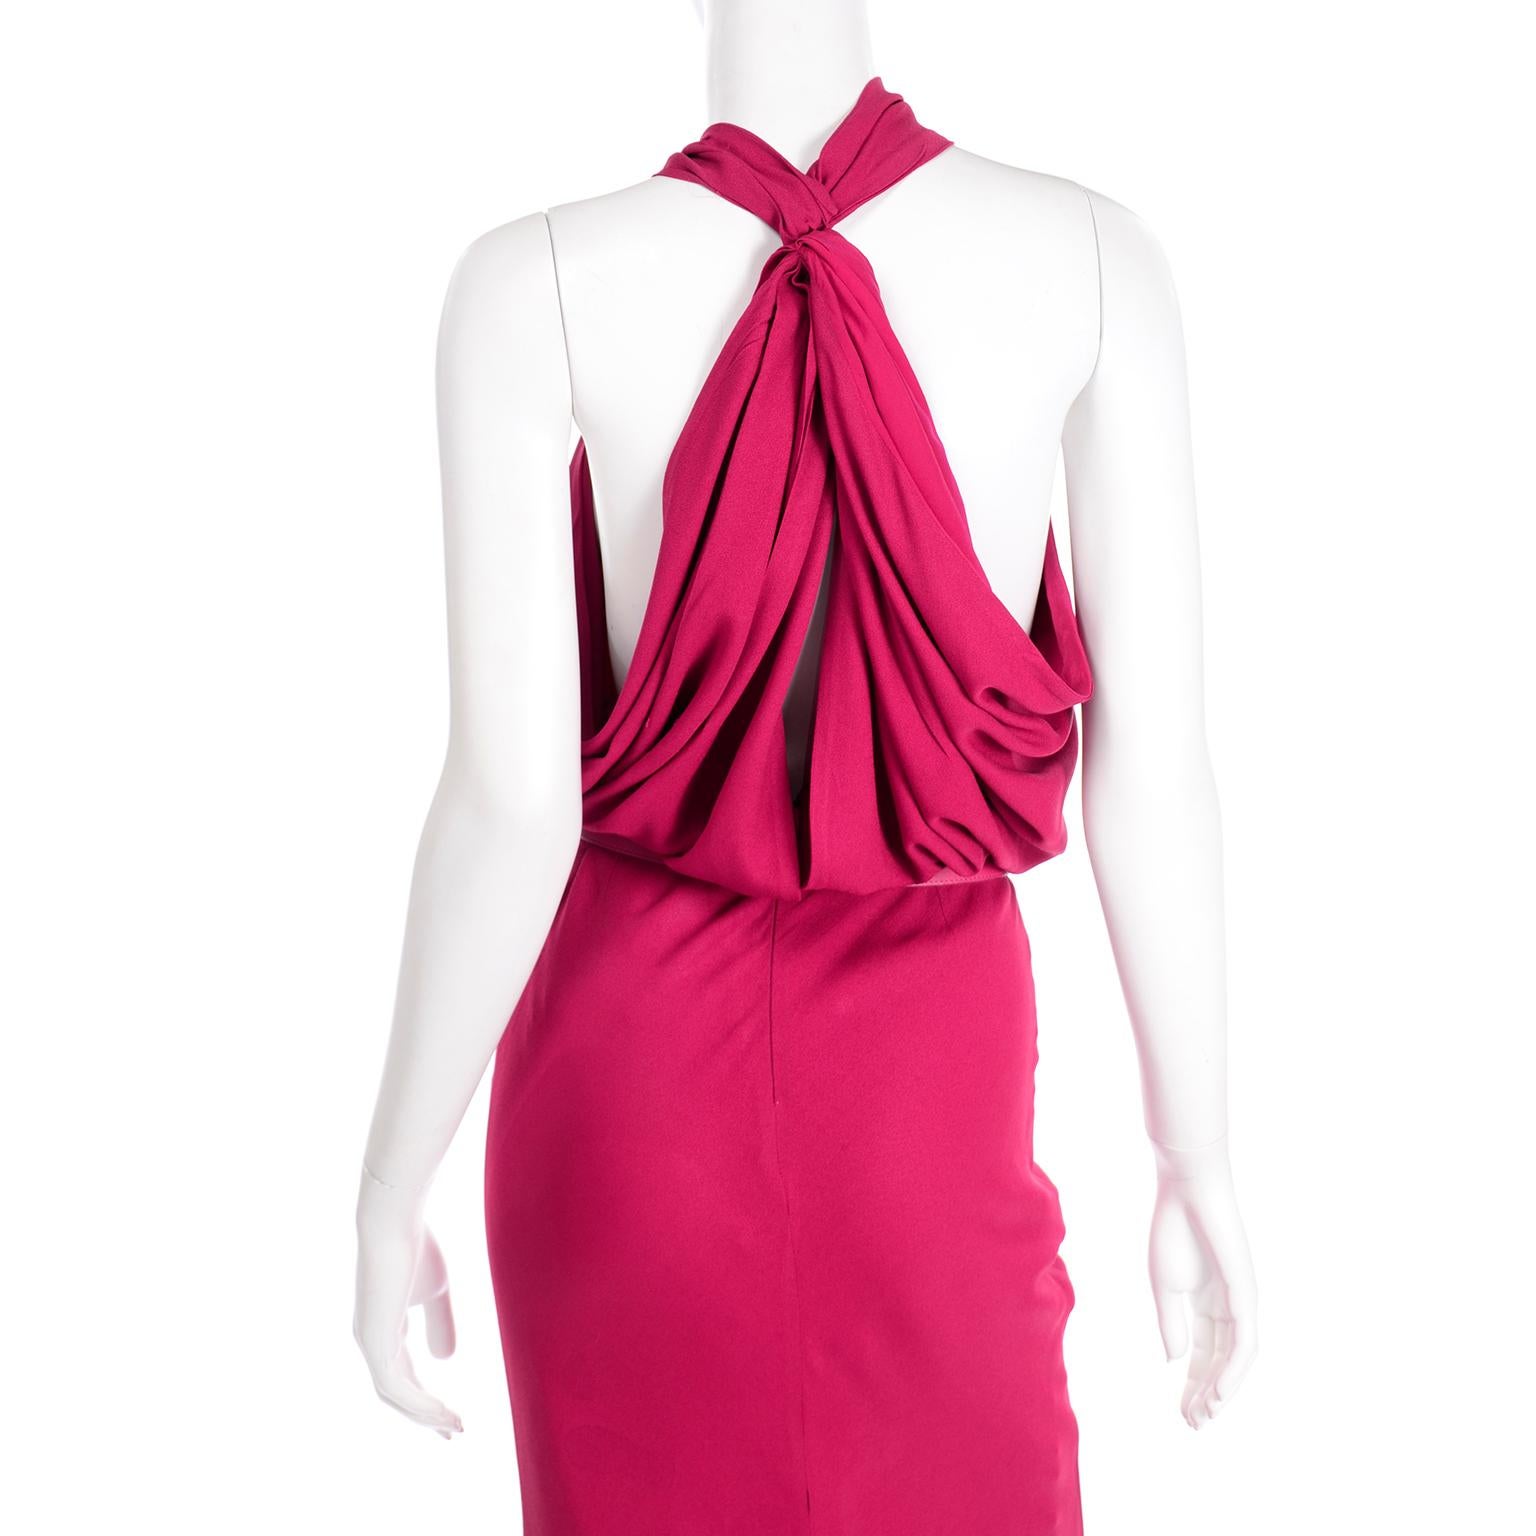 Christian Dior John Galliano Raspberry Magenta Pink 1930s Inspired Evening Dress 3